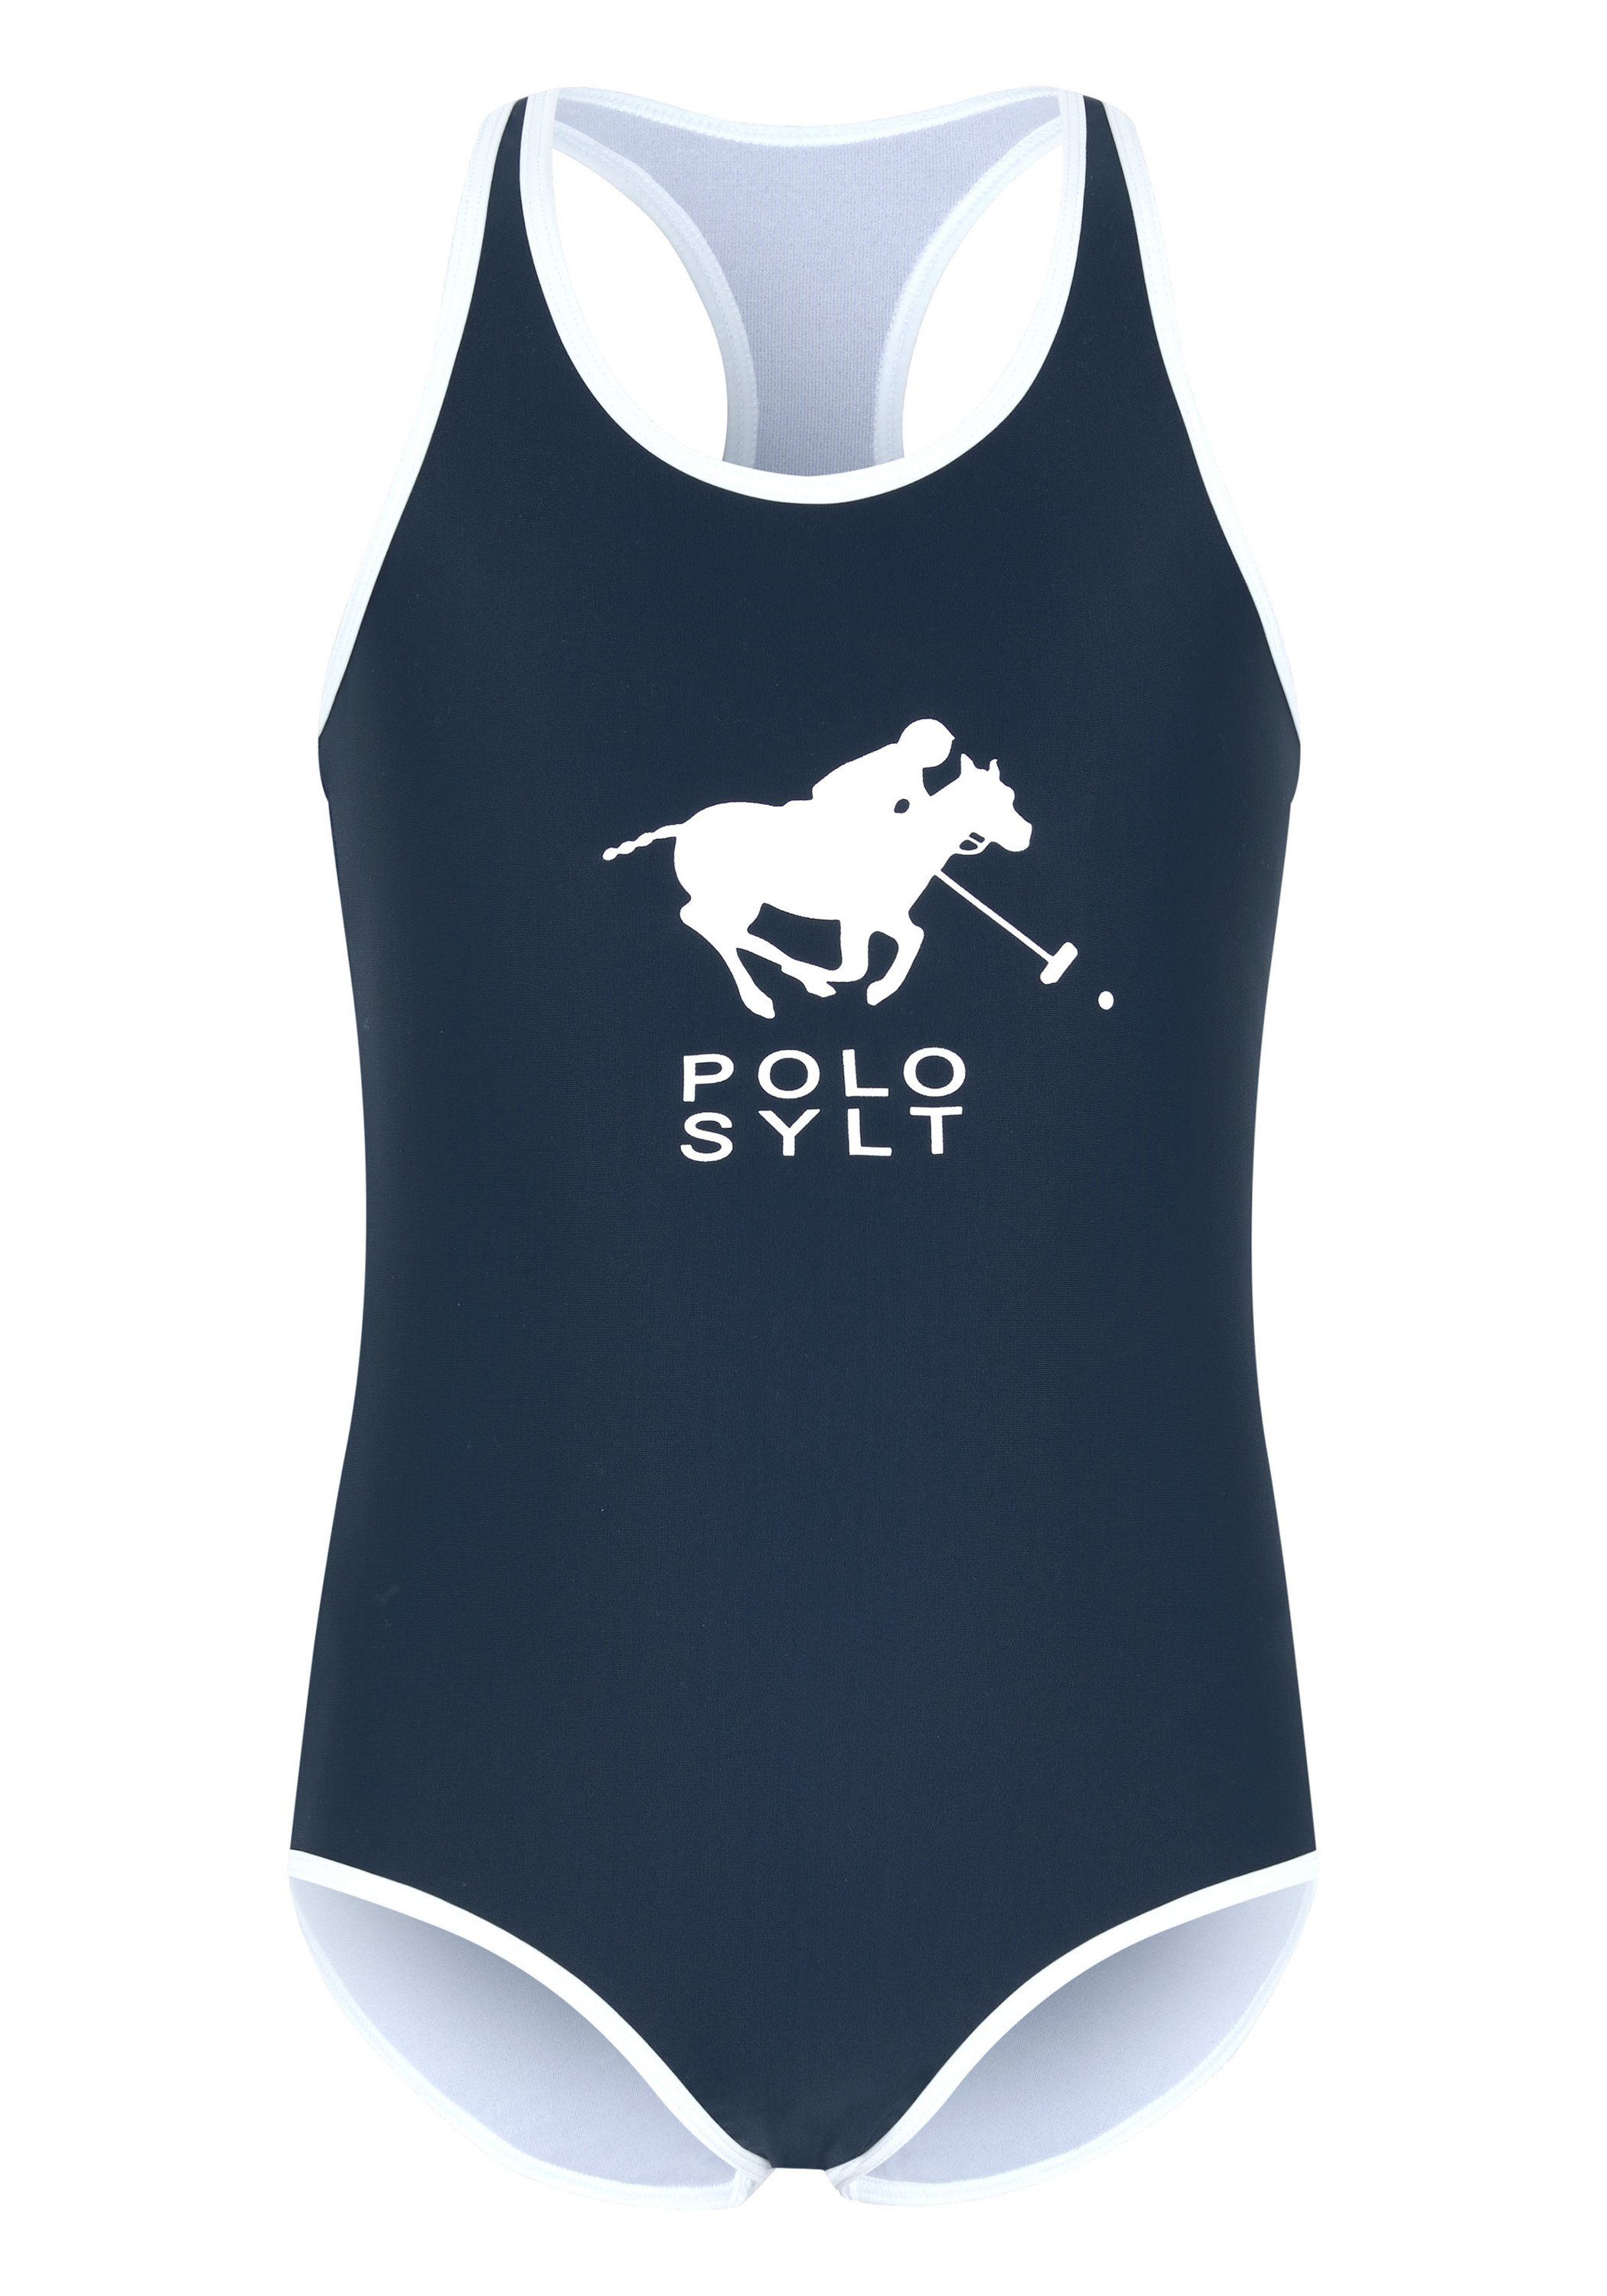 Polo Sylt Badeanzug mit Logoprint 4810 Dark Blue/White